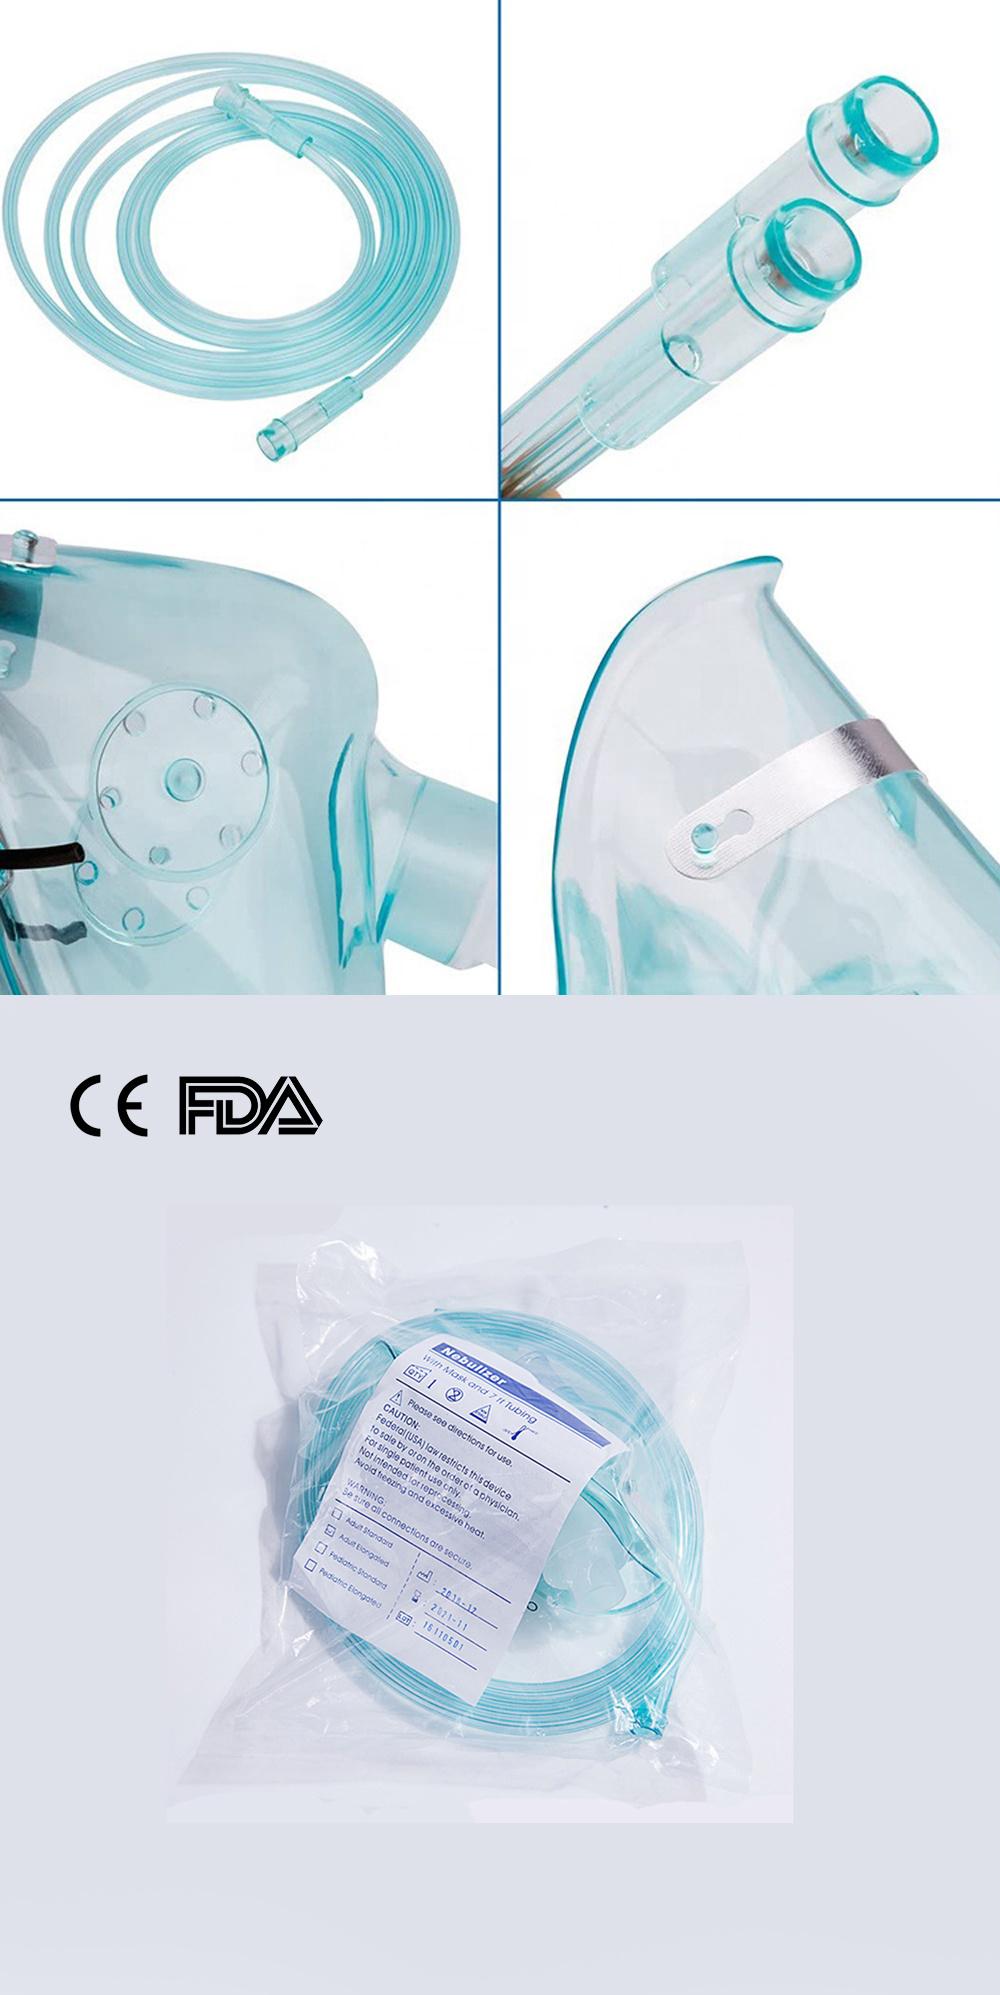 Oxygen Nebulizer Mask Disposable Medical Oxygen Nebulizer Face Mask with Oxygen Tube with CE, FDA Green Nebulizer Kit Nebulizer Set